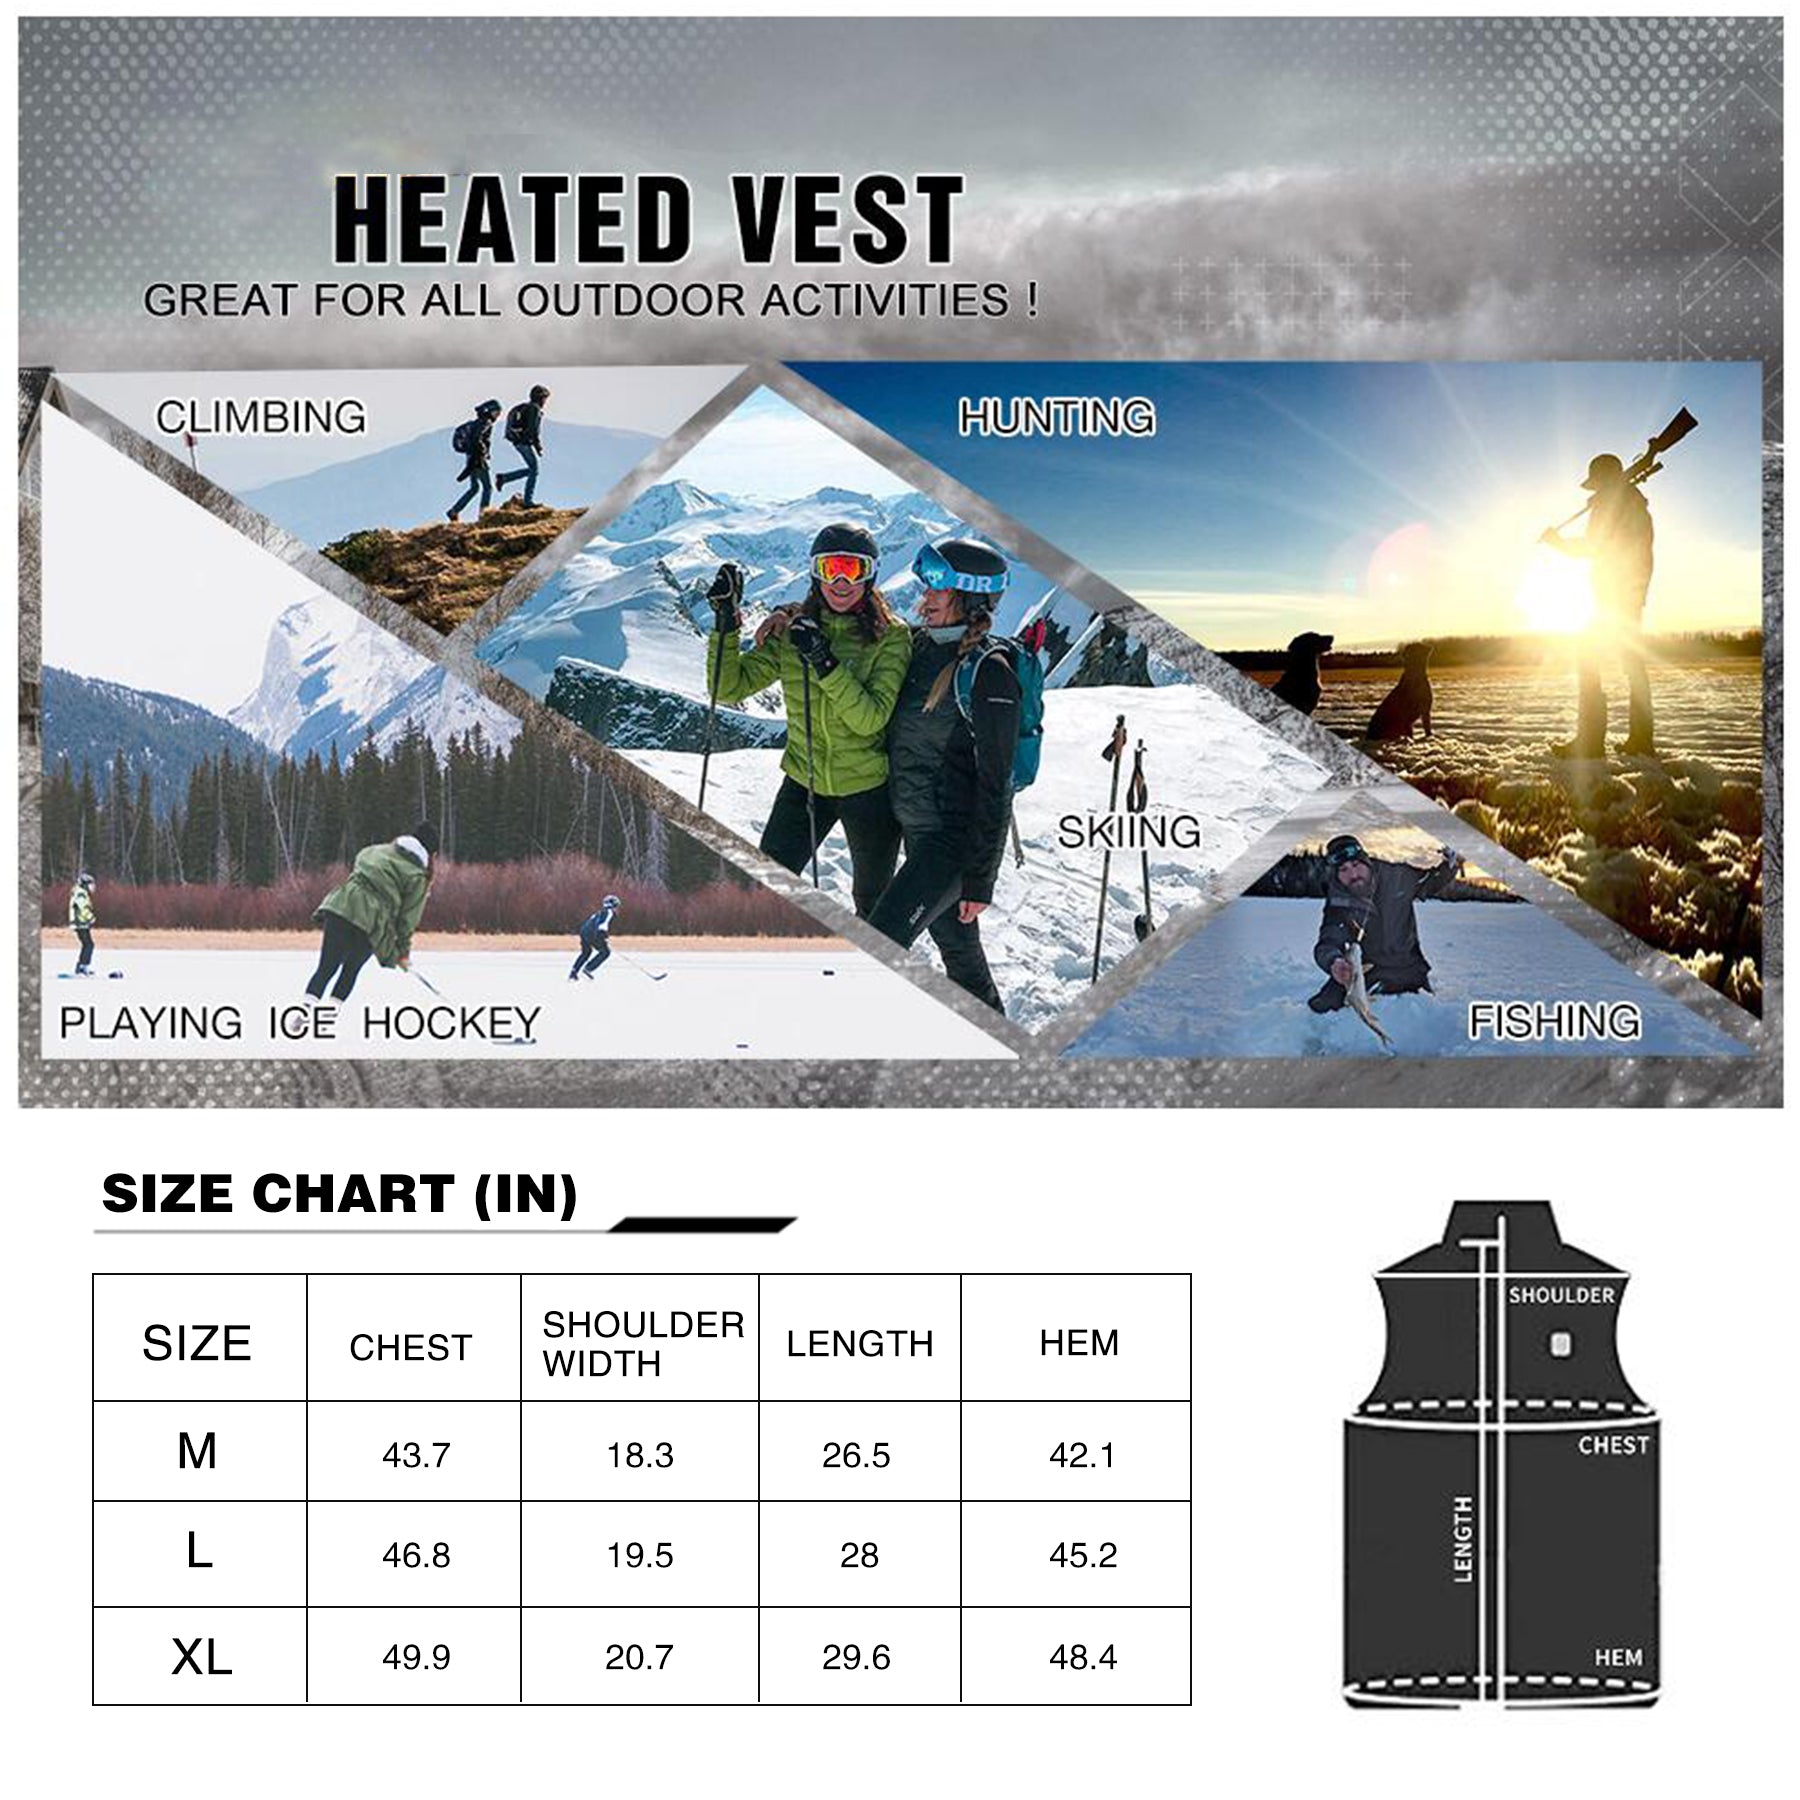 HARDLAND Heated Vest 9 Heating Zones, 2 Separate Controller, USB Lightweight Electric Jacket for Men